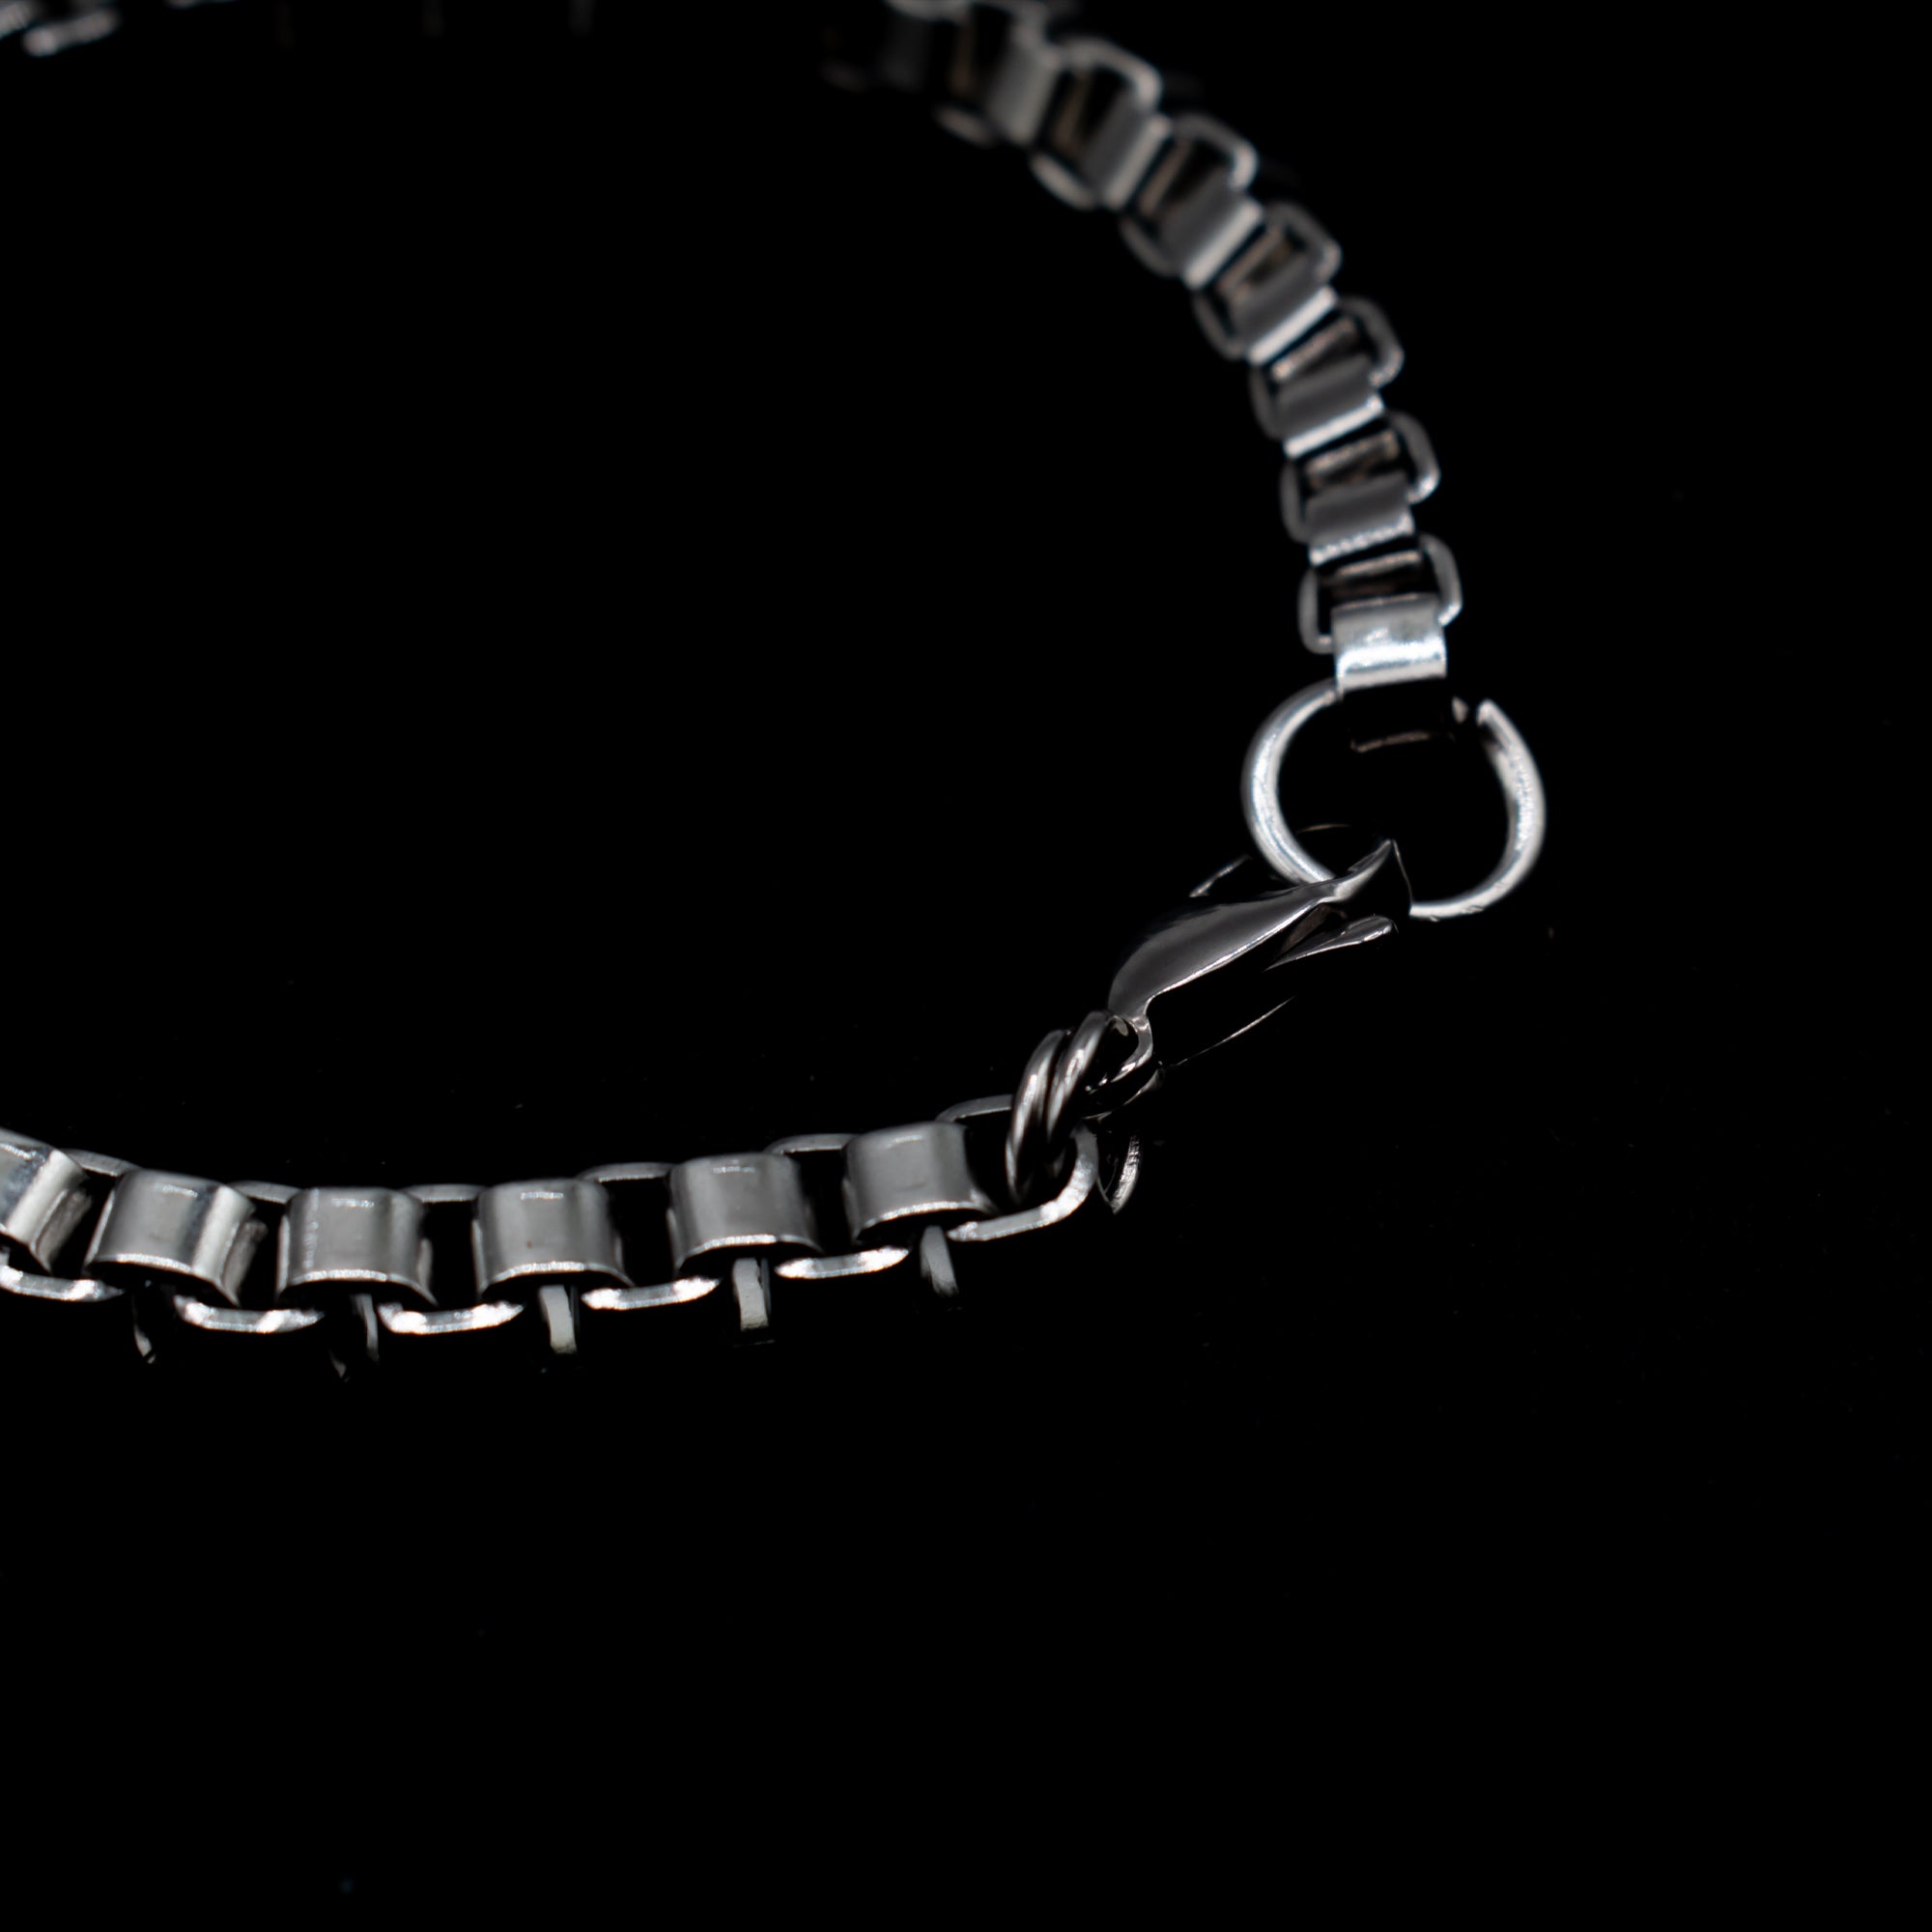 Square Box Chain Bracelet - (Silver) 6mm